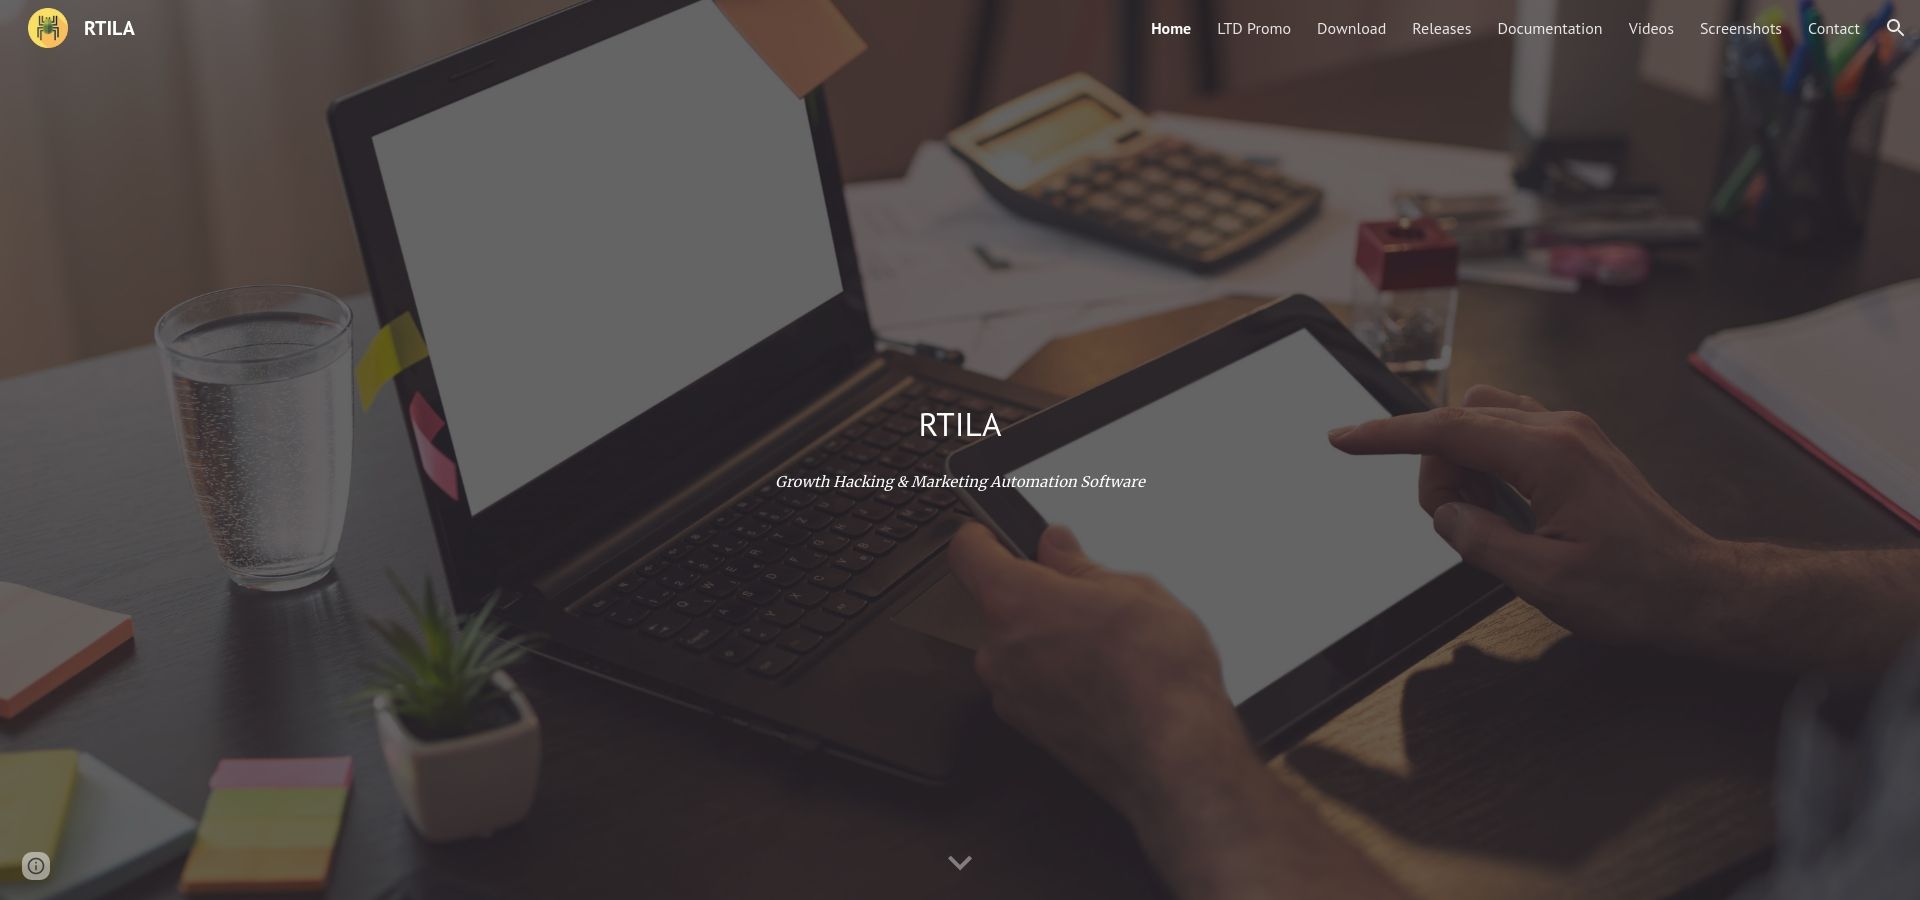 Rtila - Growth Hacking & Marketing Automation Software